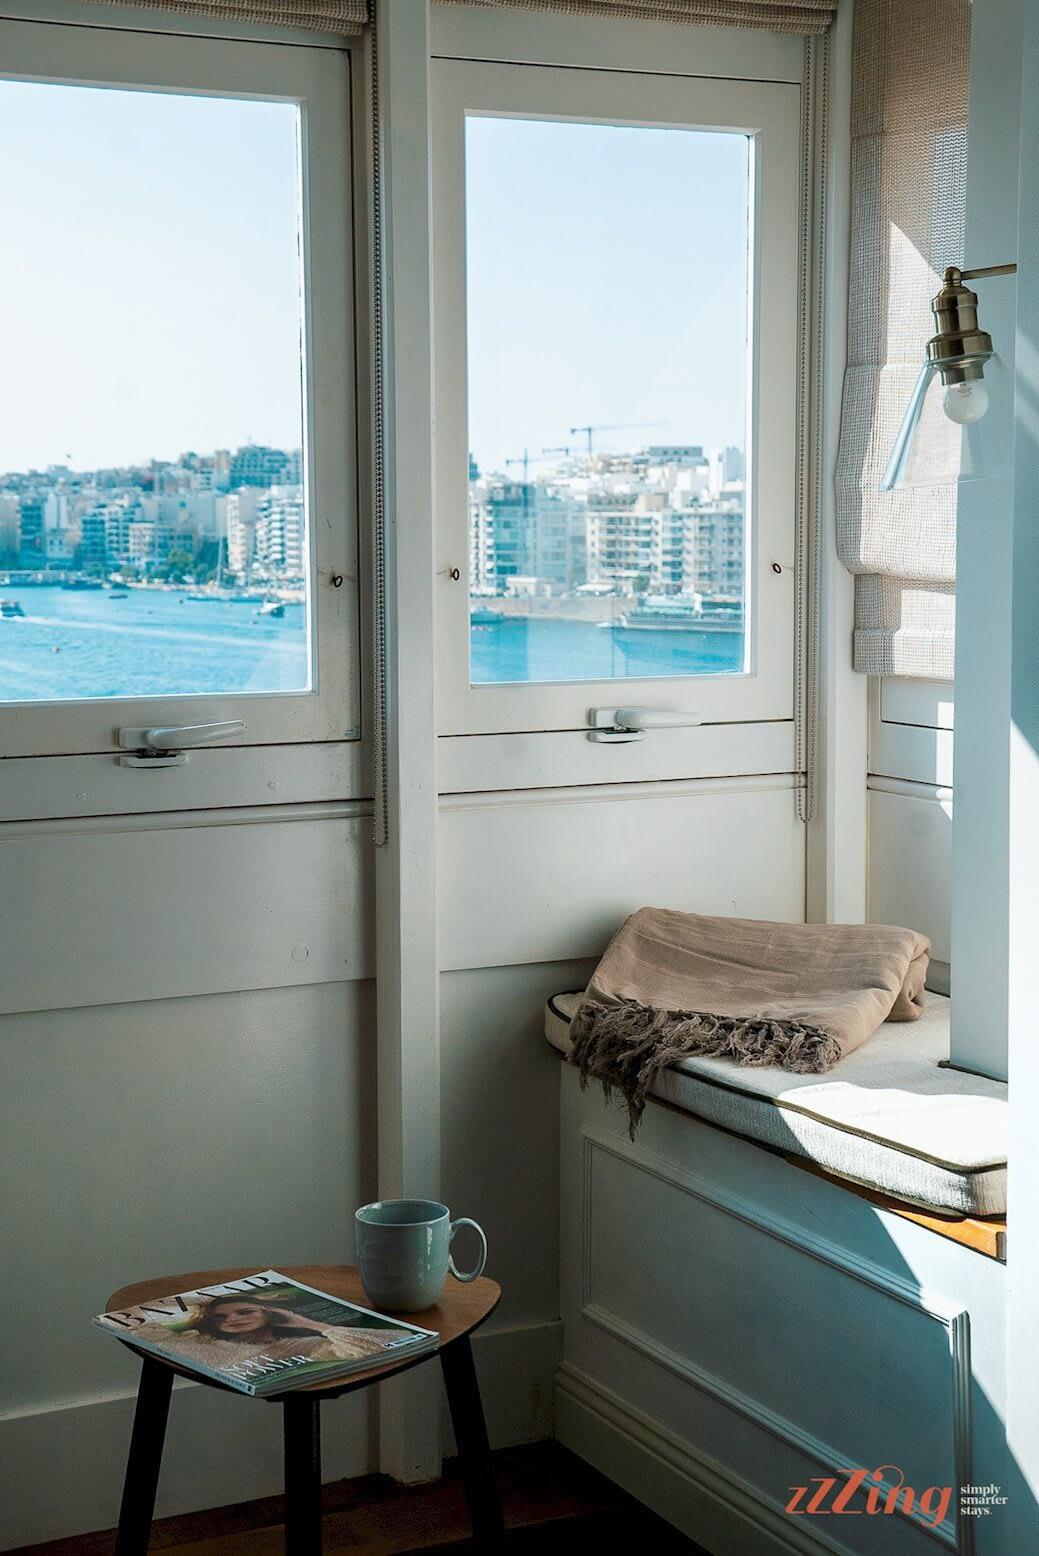 A luxury apartment in Malta’s capital Valletta